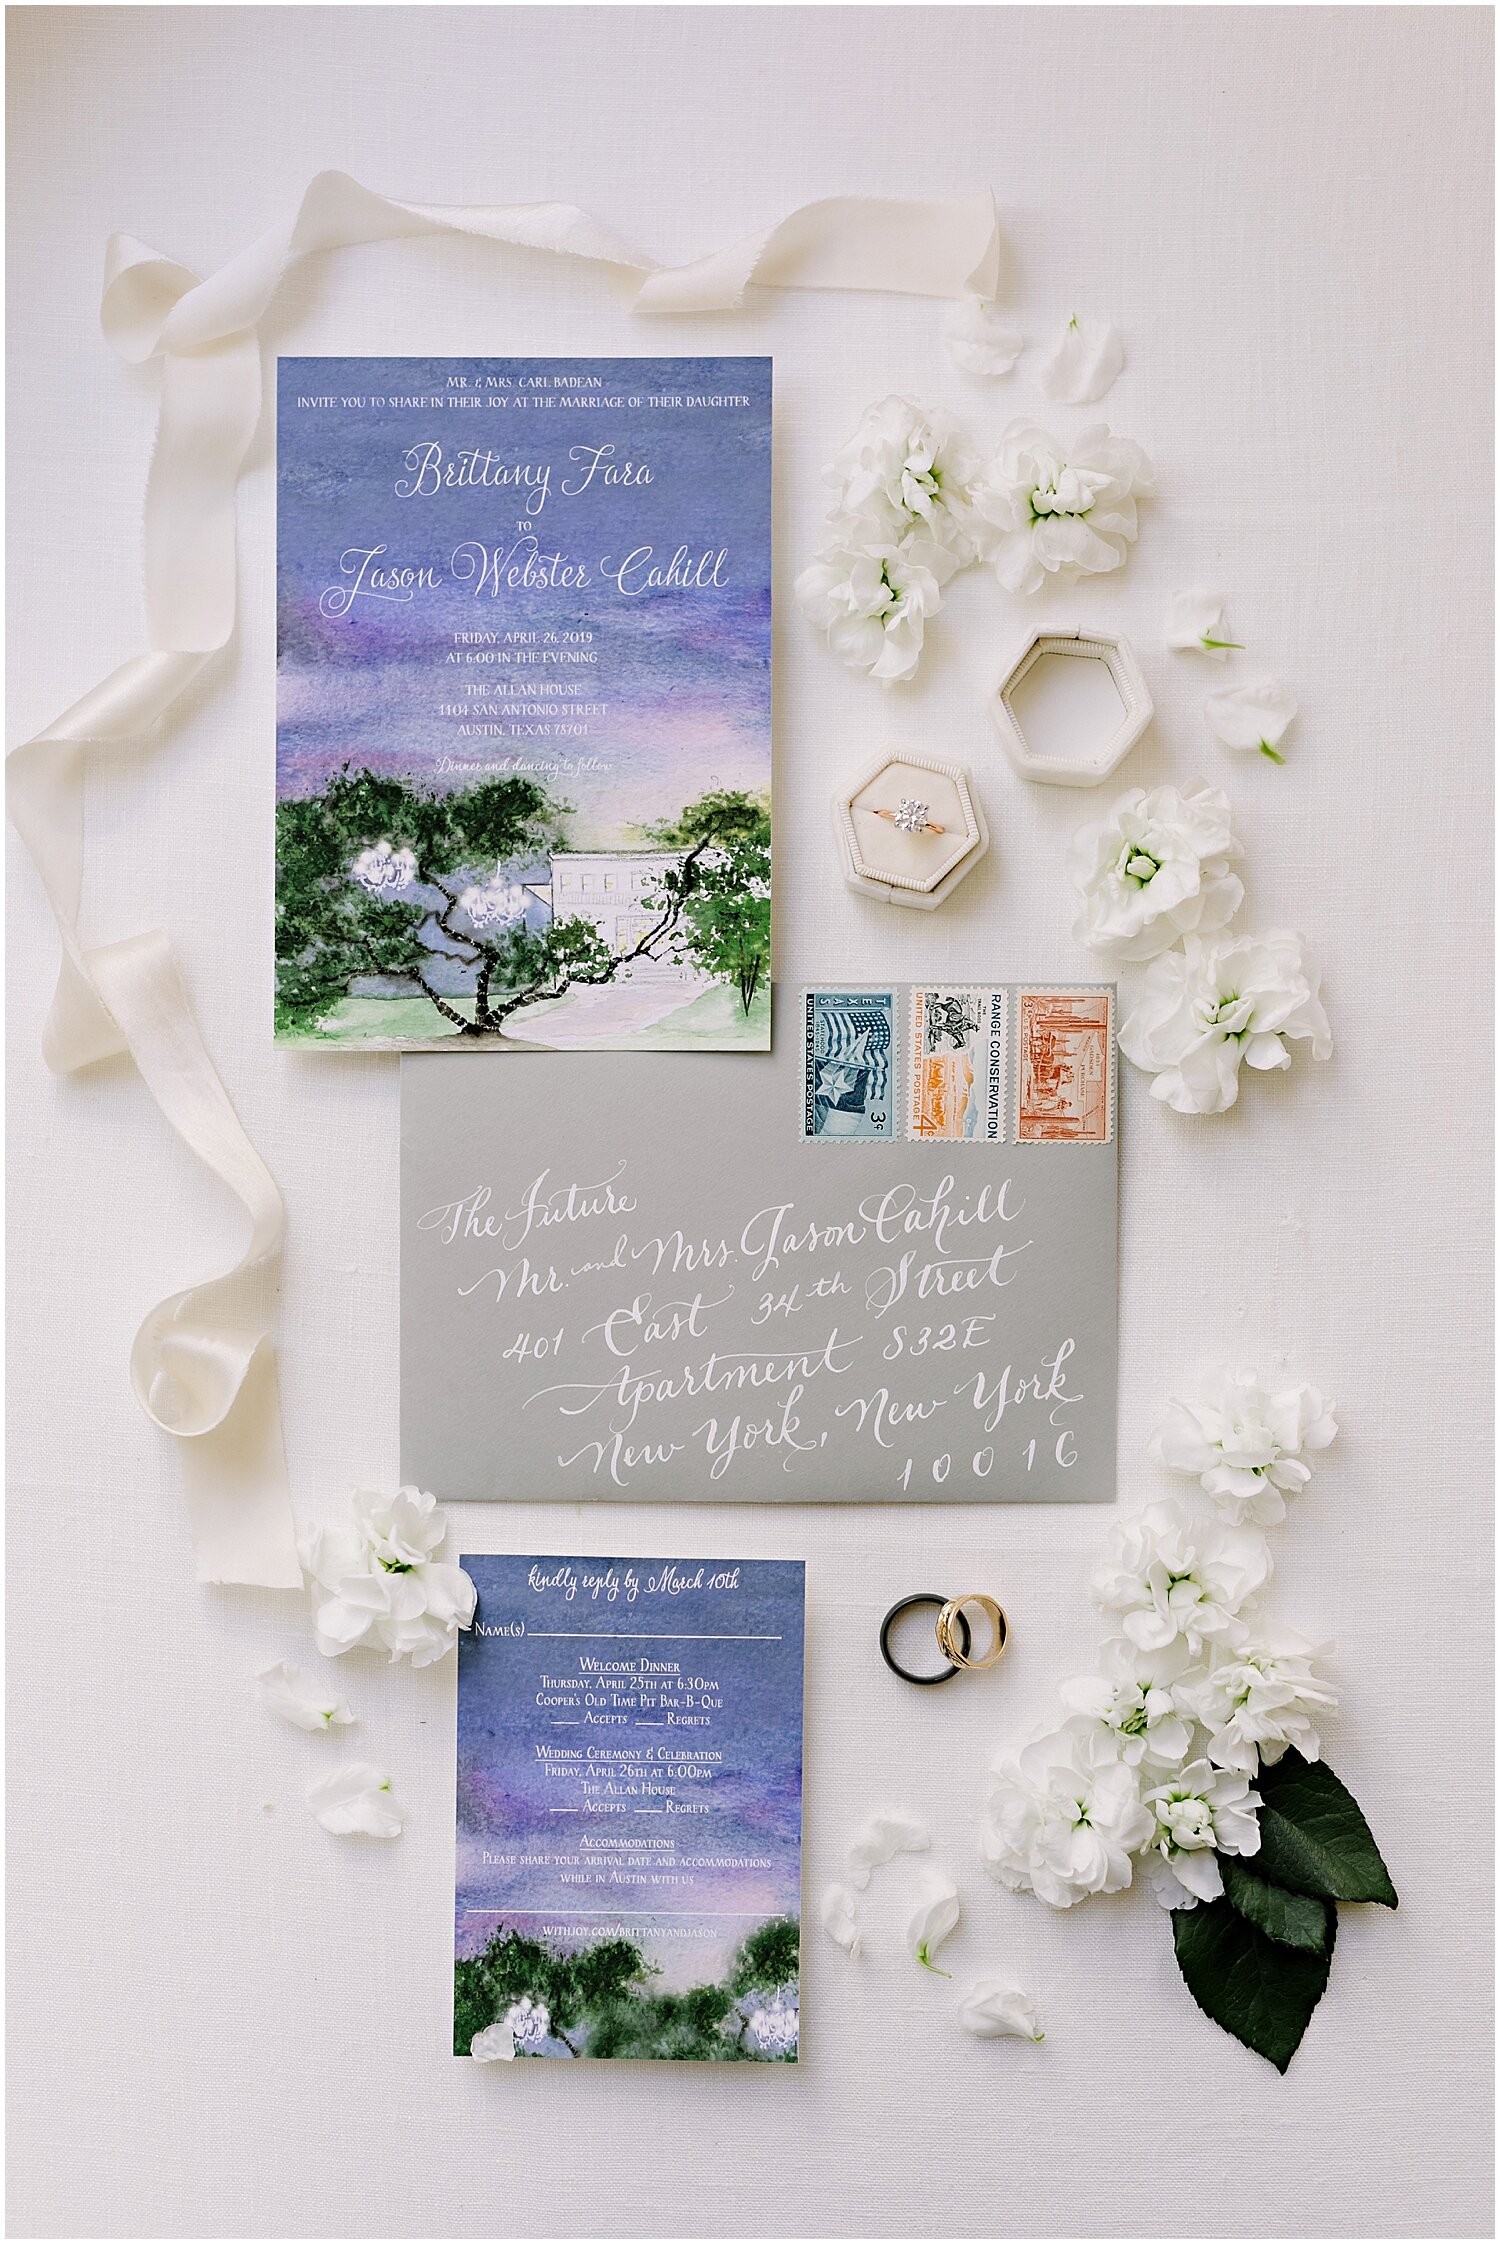  Wedding invitation layout 